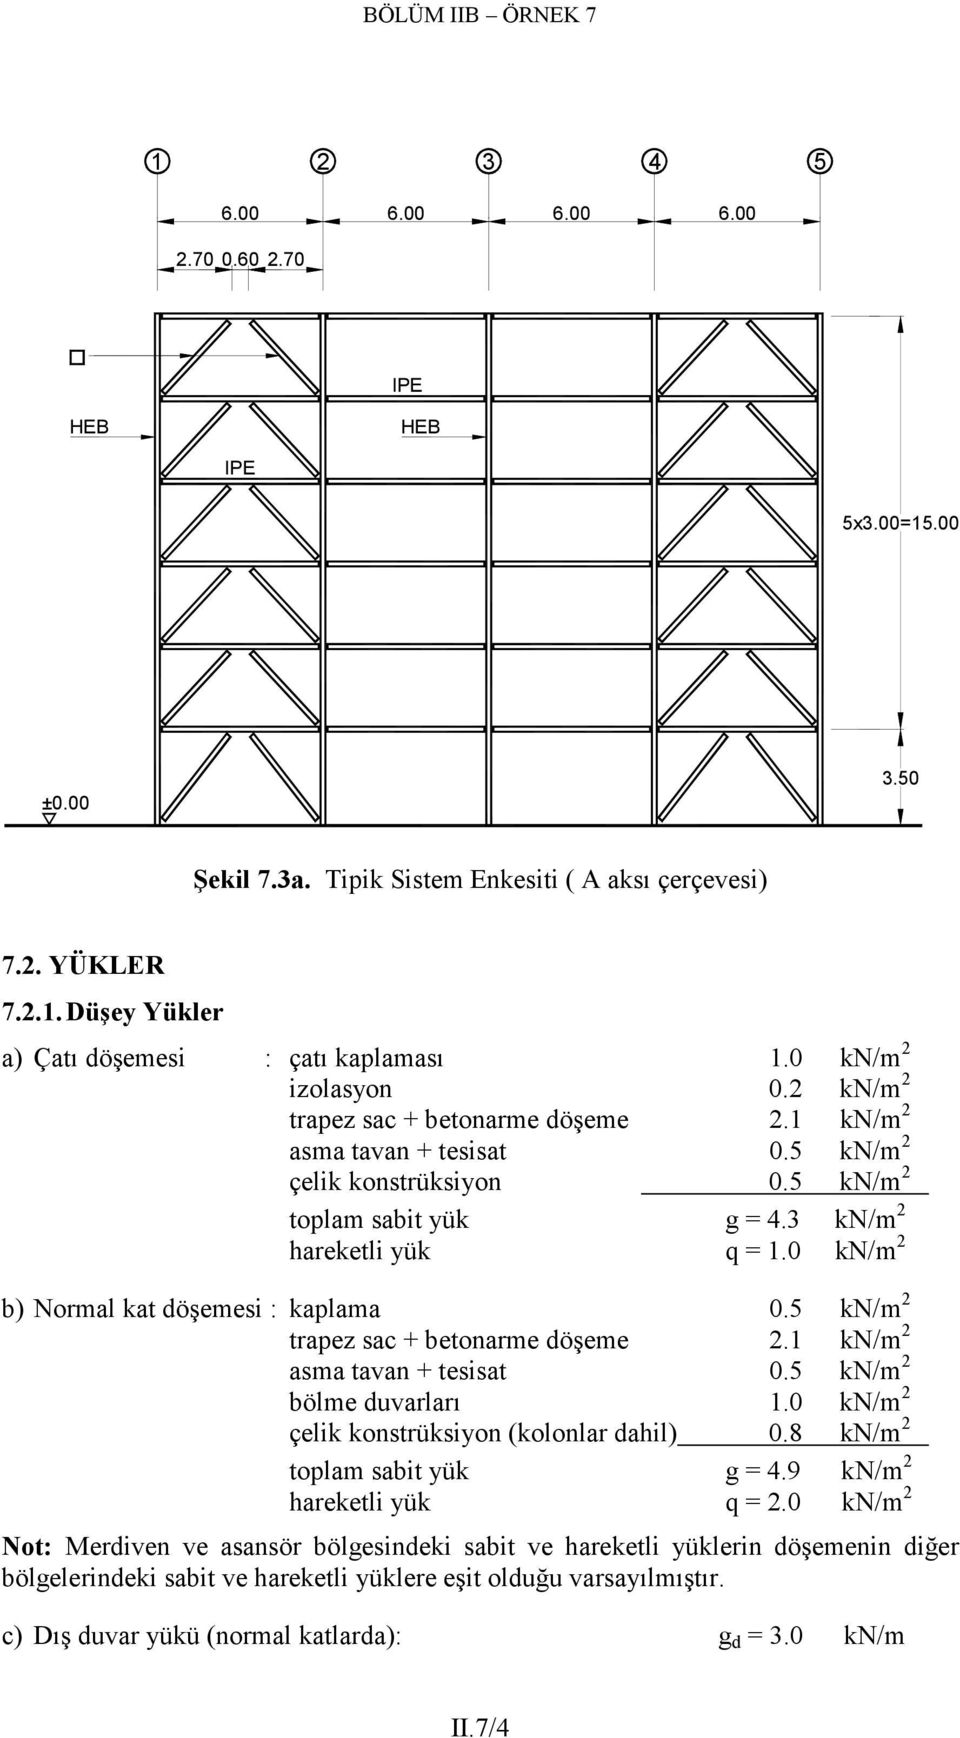 0 kn/m b) Norml kt döşemesi : klm 0.5 kn/m trez sc + betonrme döşeme.1 kn/m sm tvn + tesist 0.5 kn/m bölme duvrlrı 1.0 kn/m çelik konstrüksiyon (kolonlr dhil) 0.8 kn/m tolm sbit yük g = 4.